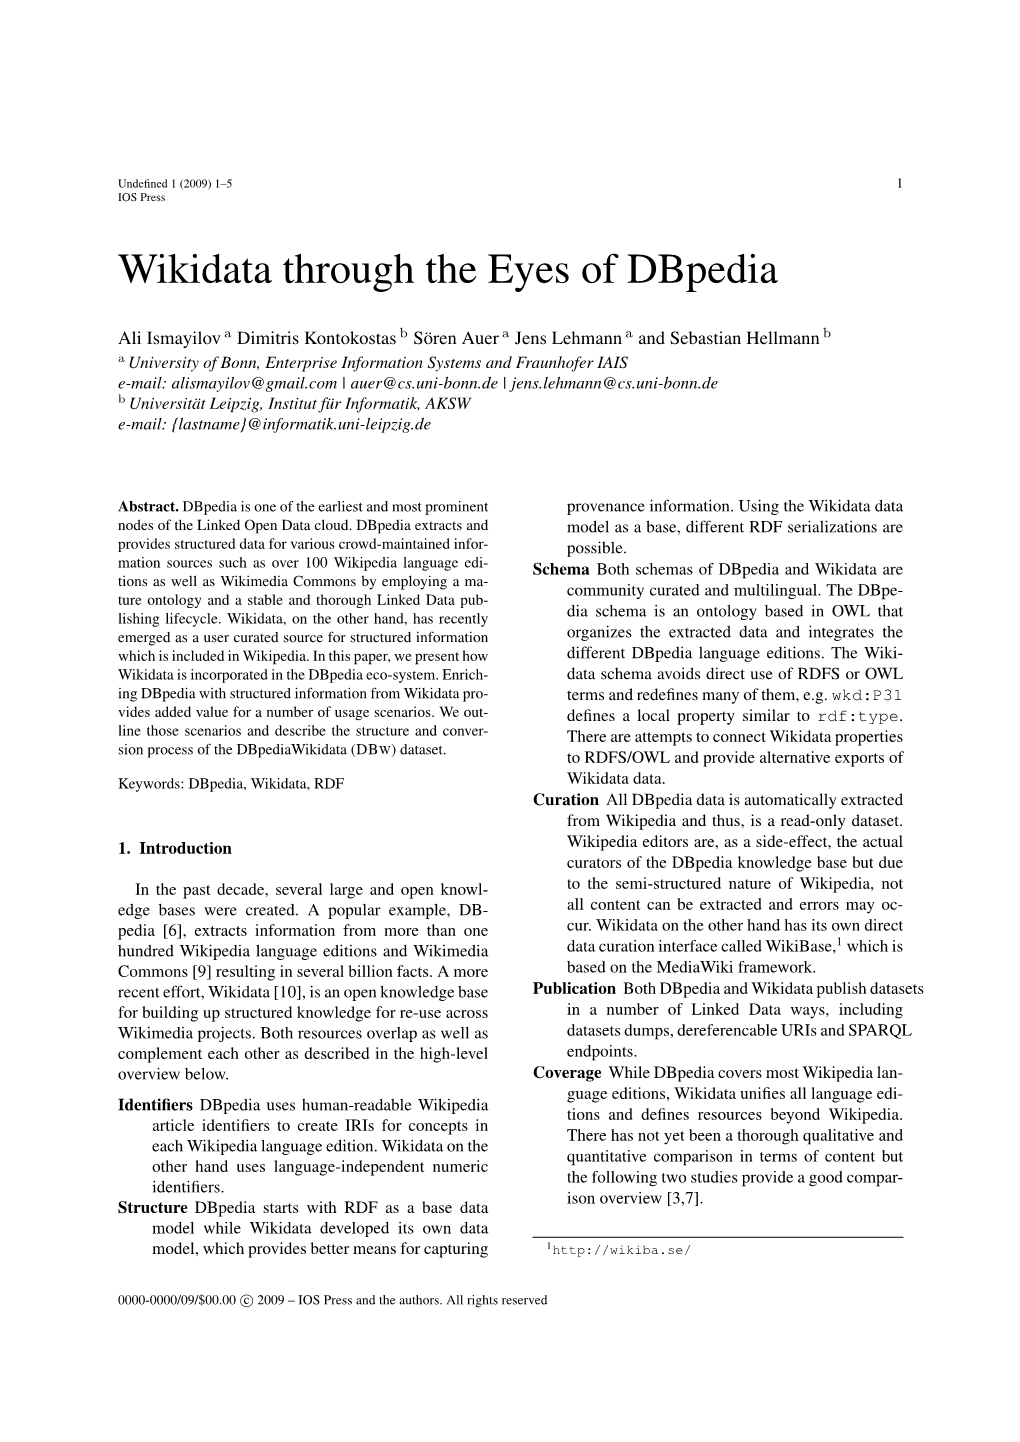 Wikidata Through the Eyes of Dbpedia